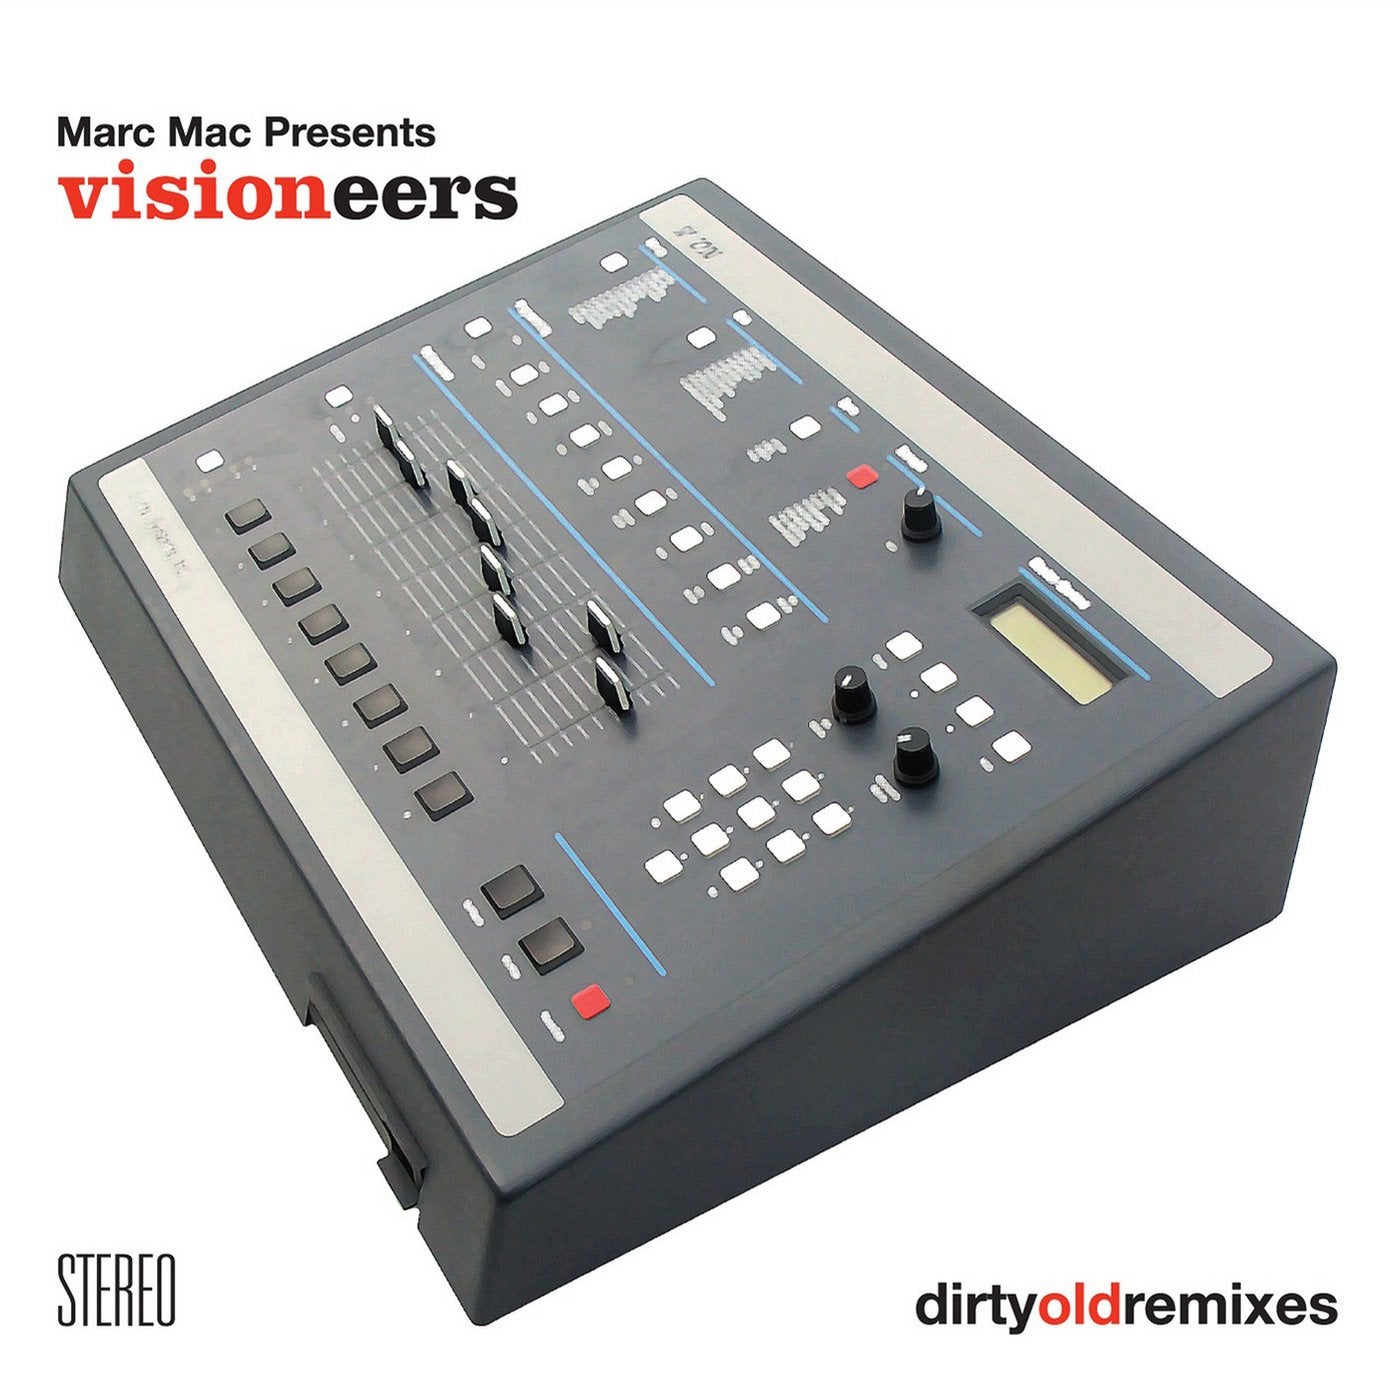 Dirty Old Remixes